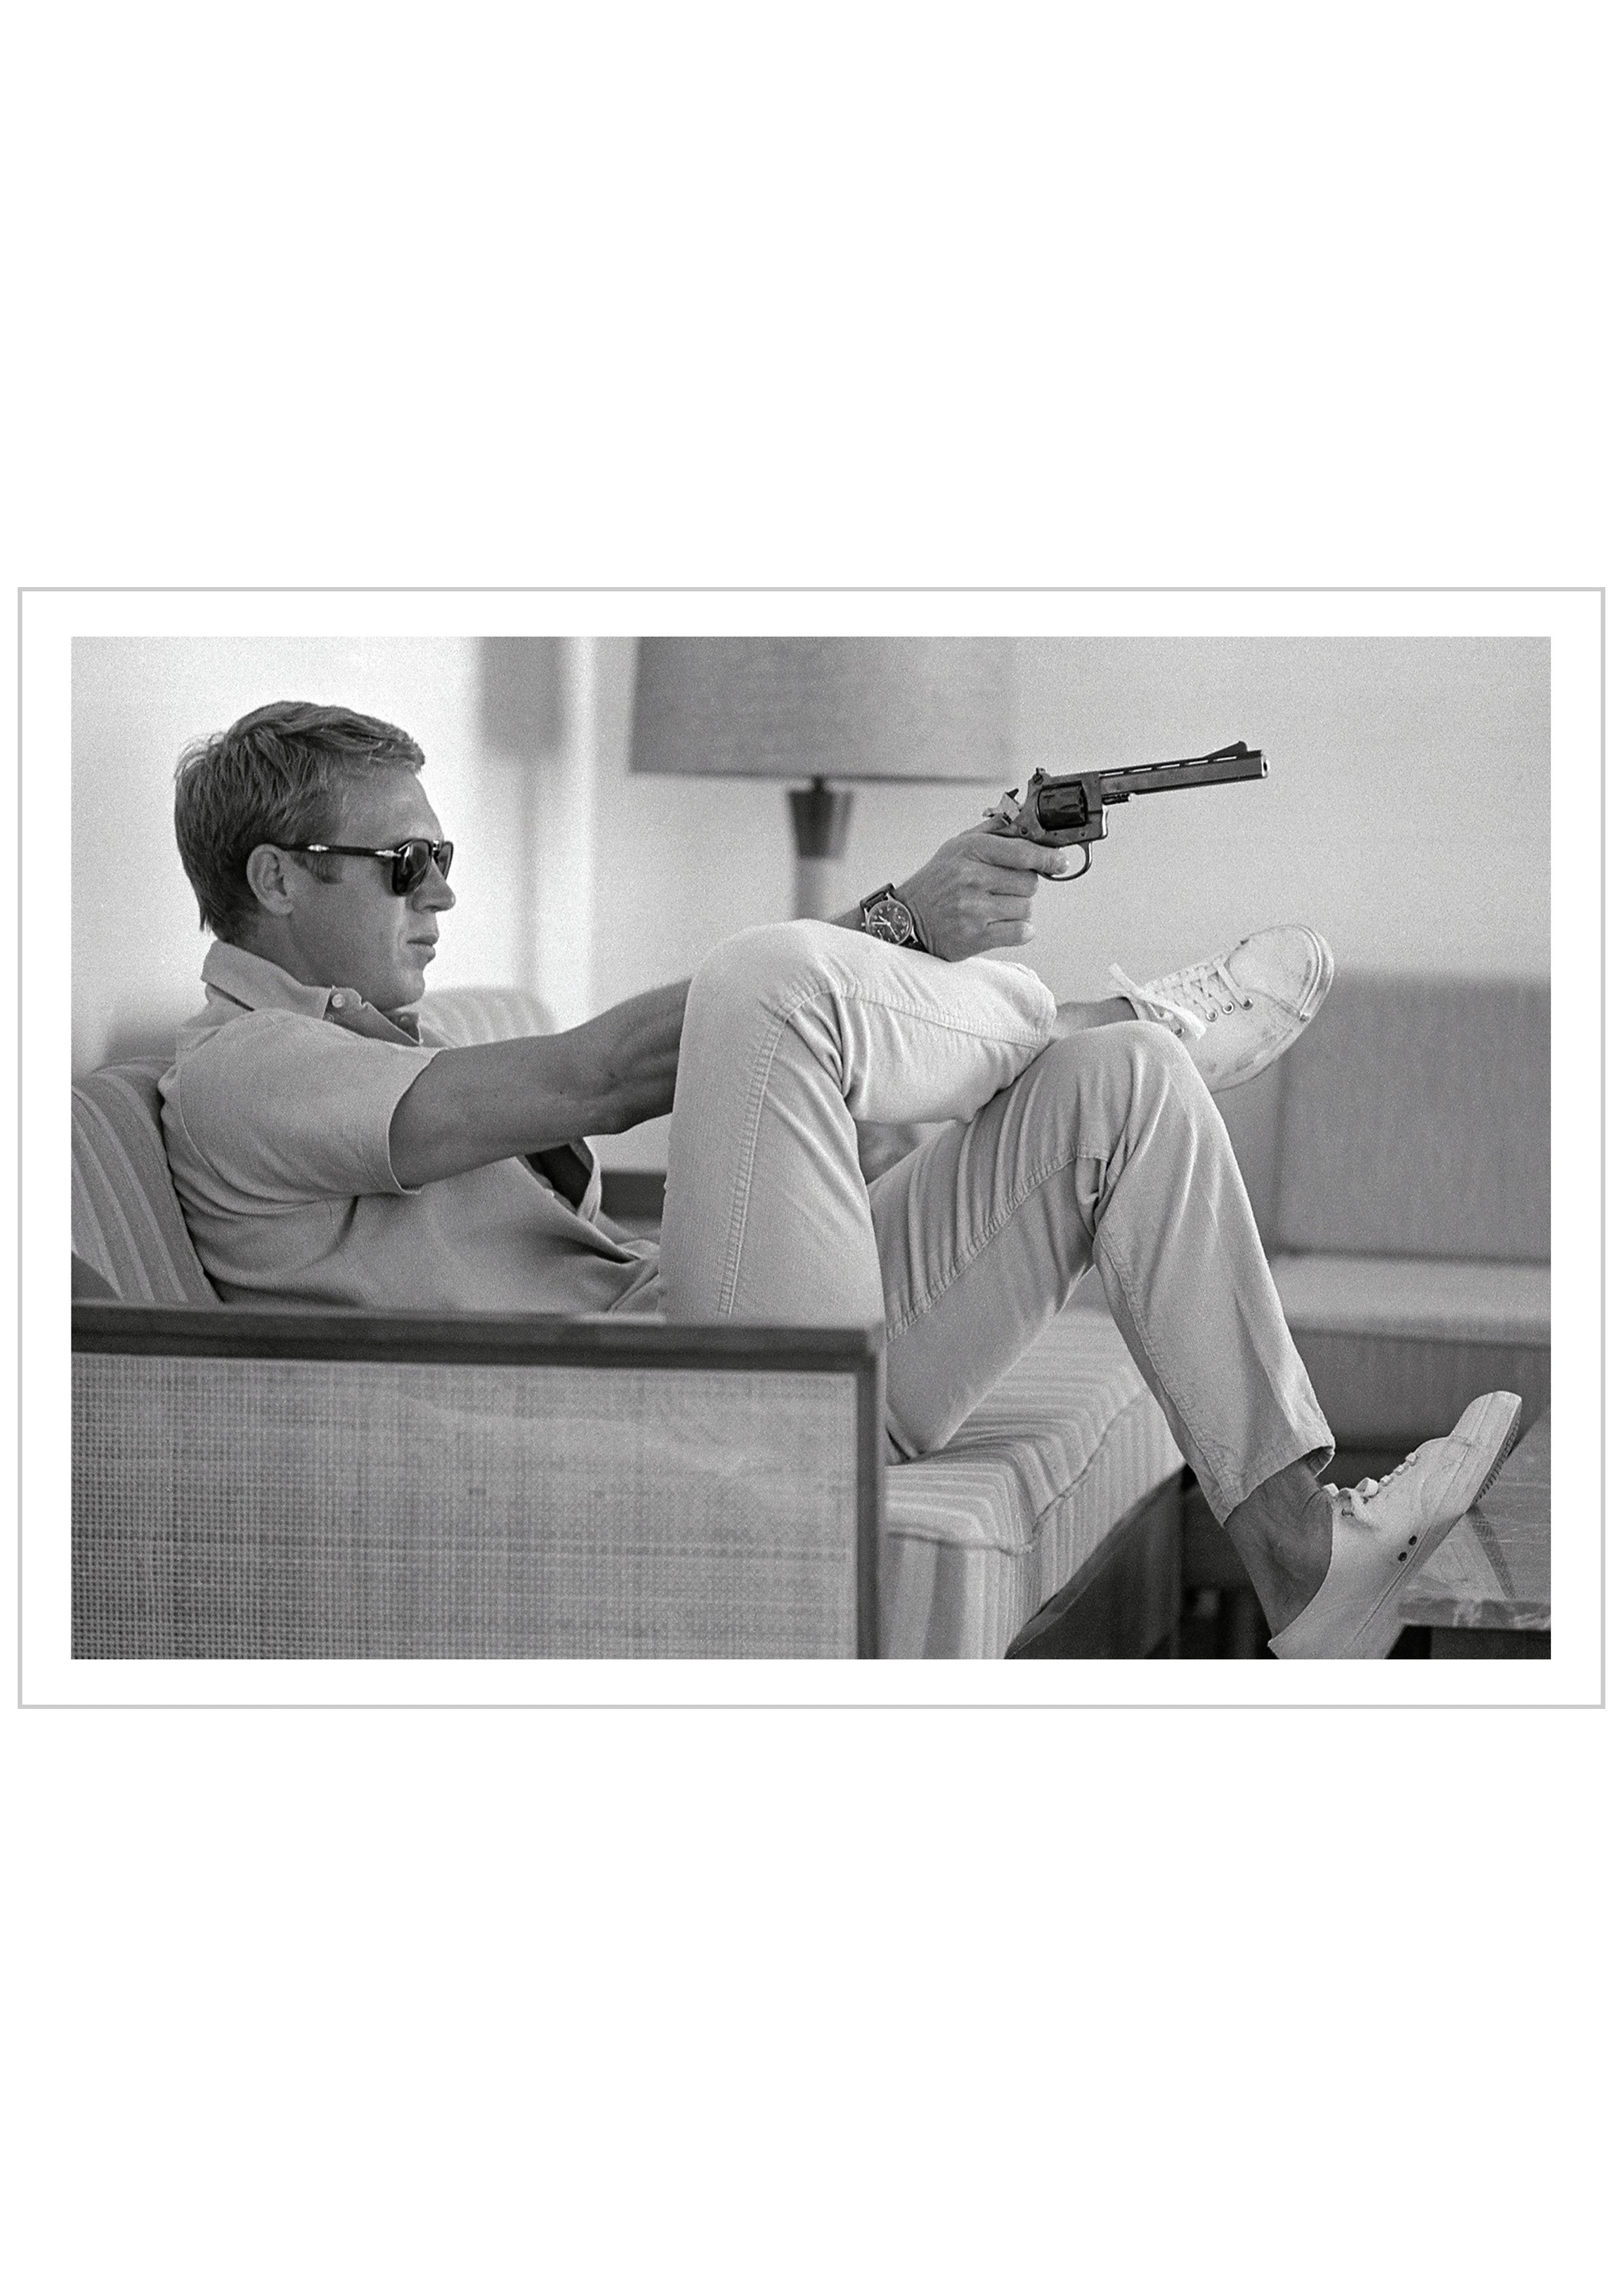 Steve-mcQueen-takes-aim-1963-pistol-revolver